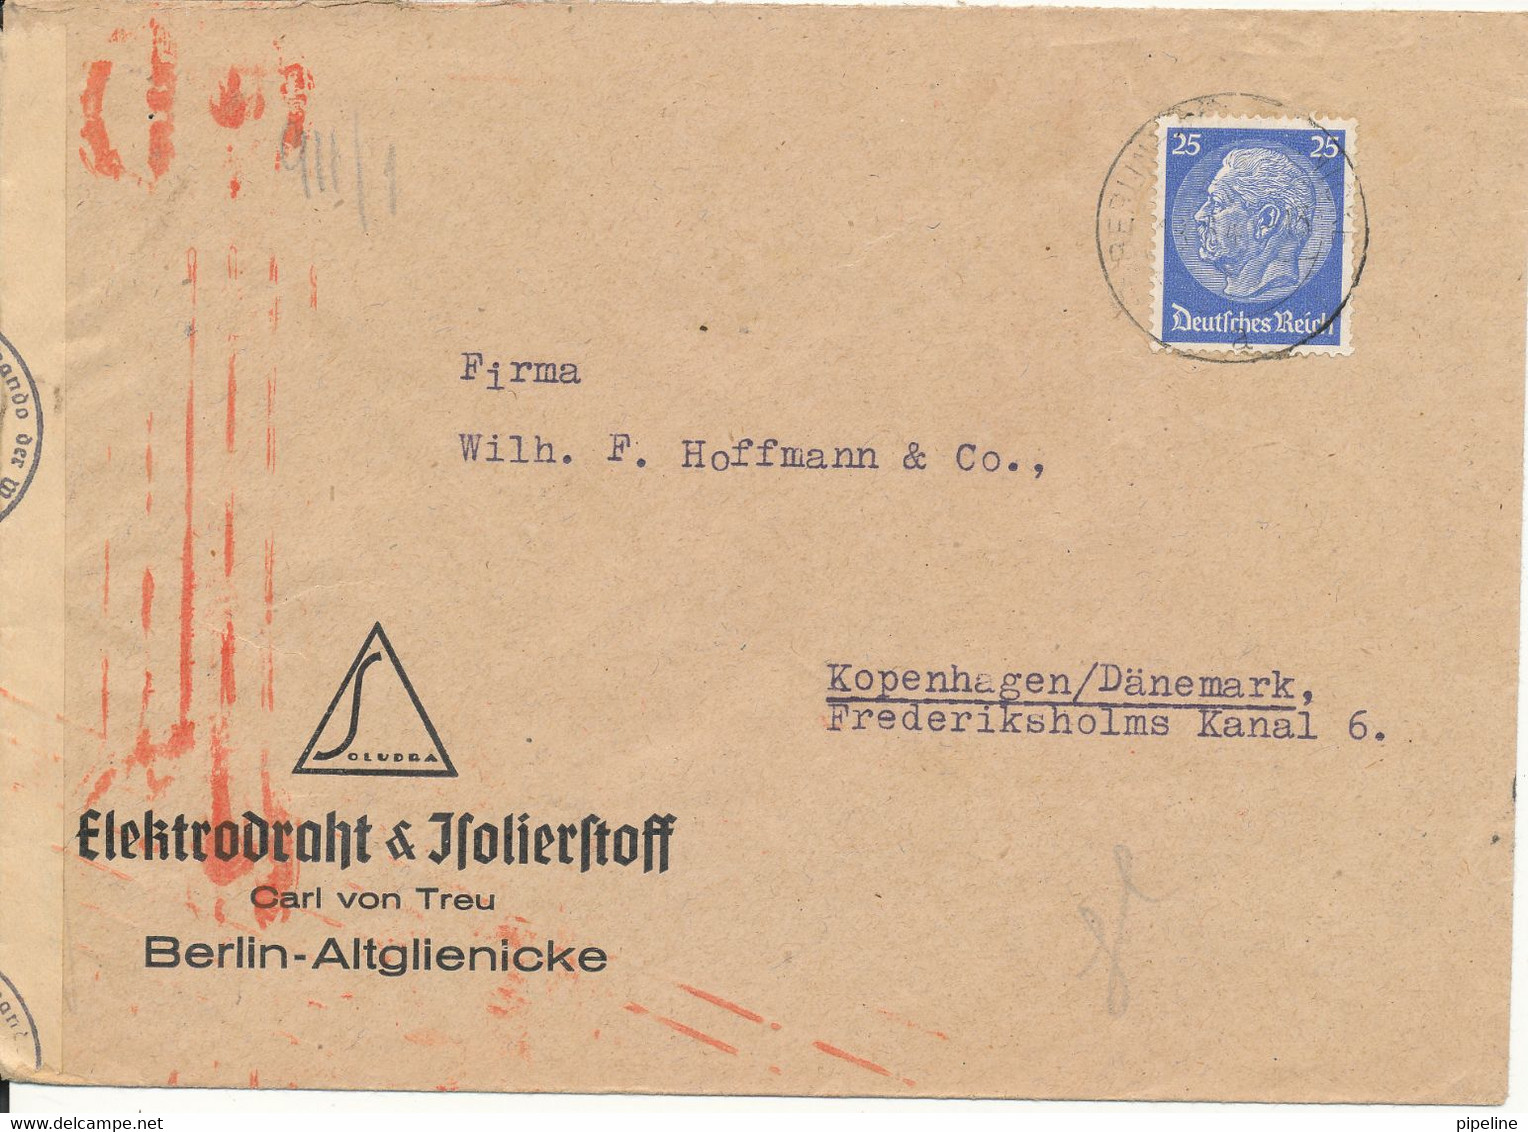 Germany Nazi Censored Cover Sent To Denmark Berlin 3-6-1941 - Briefe U. Dokumente